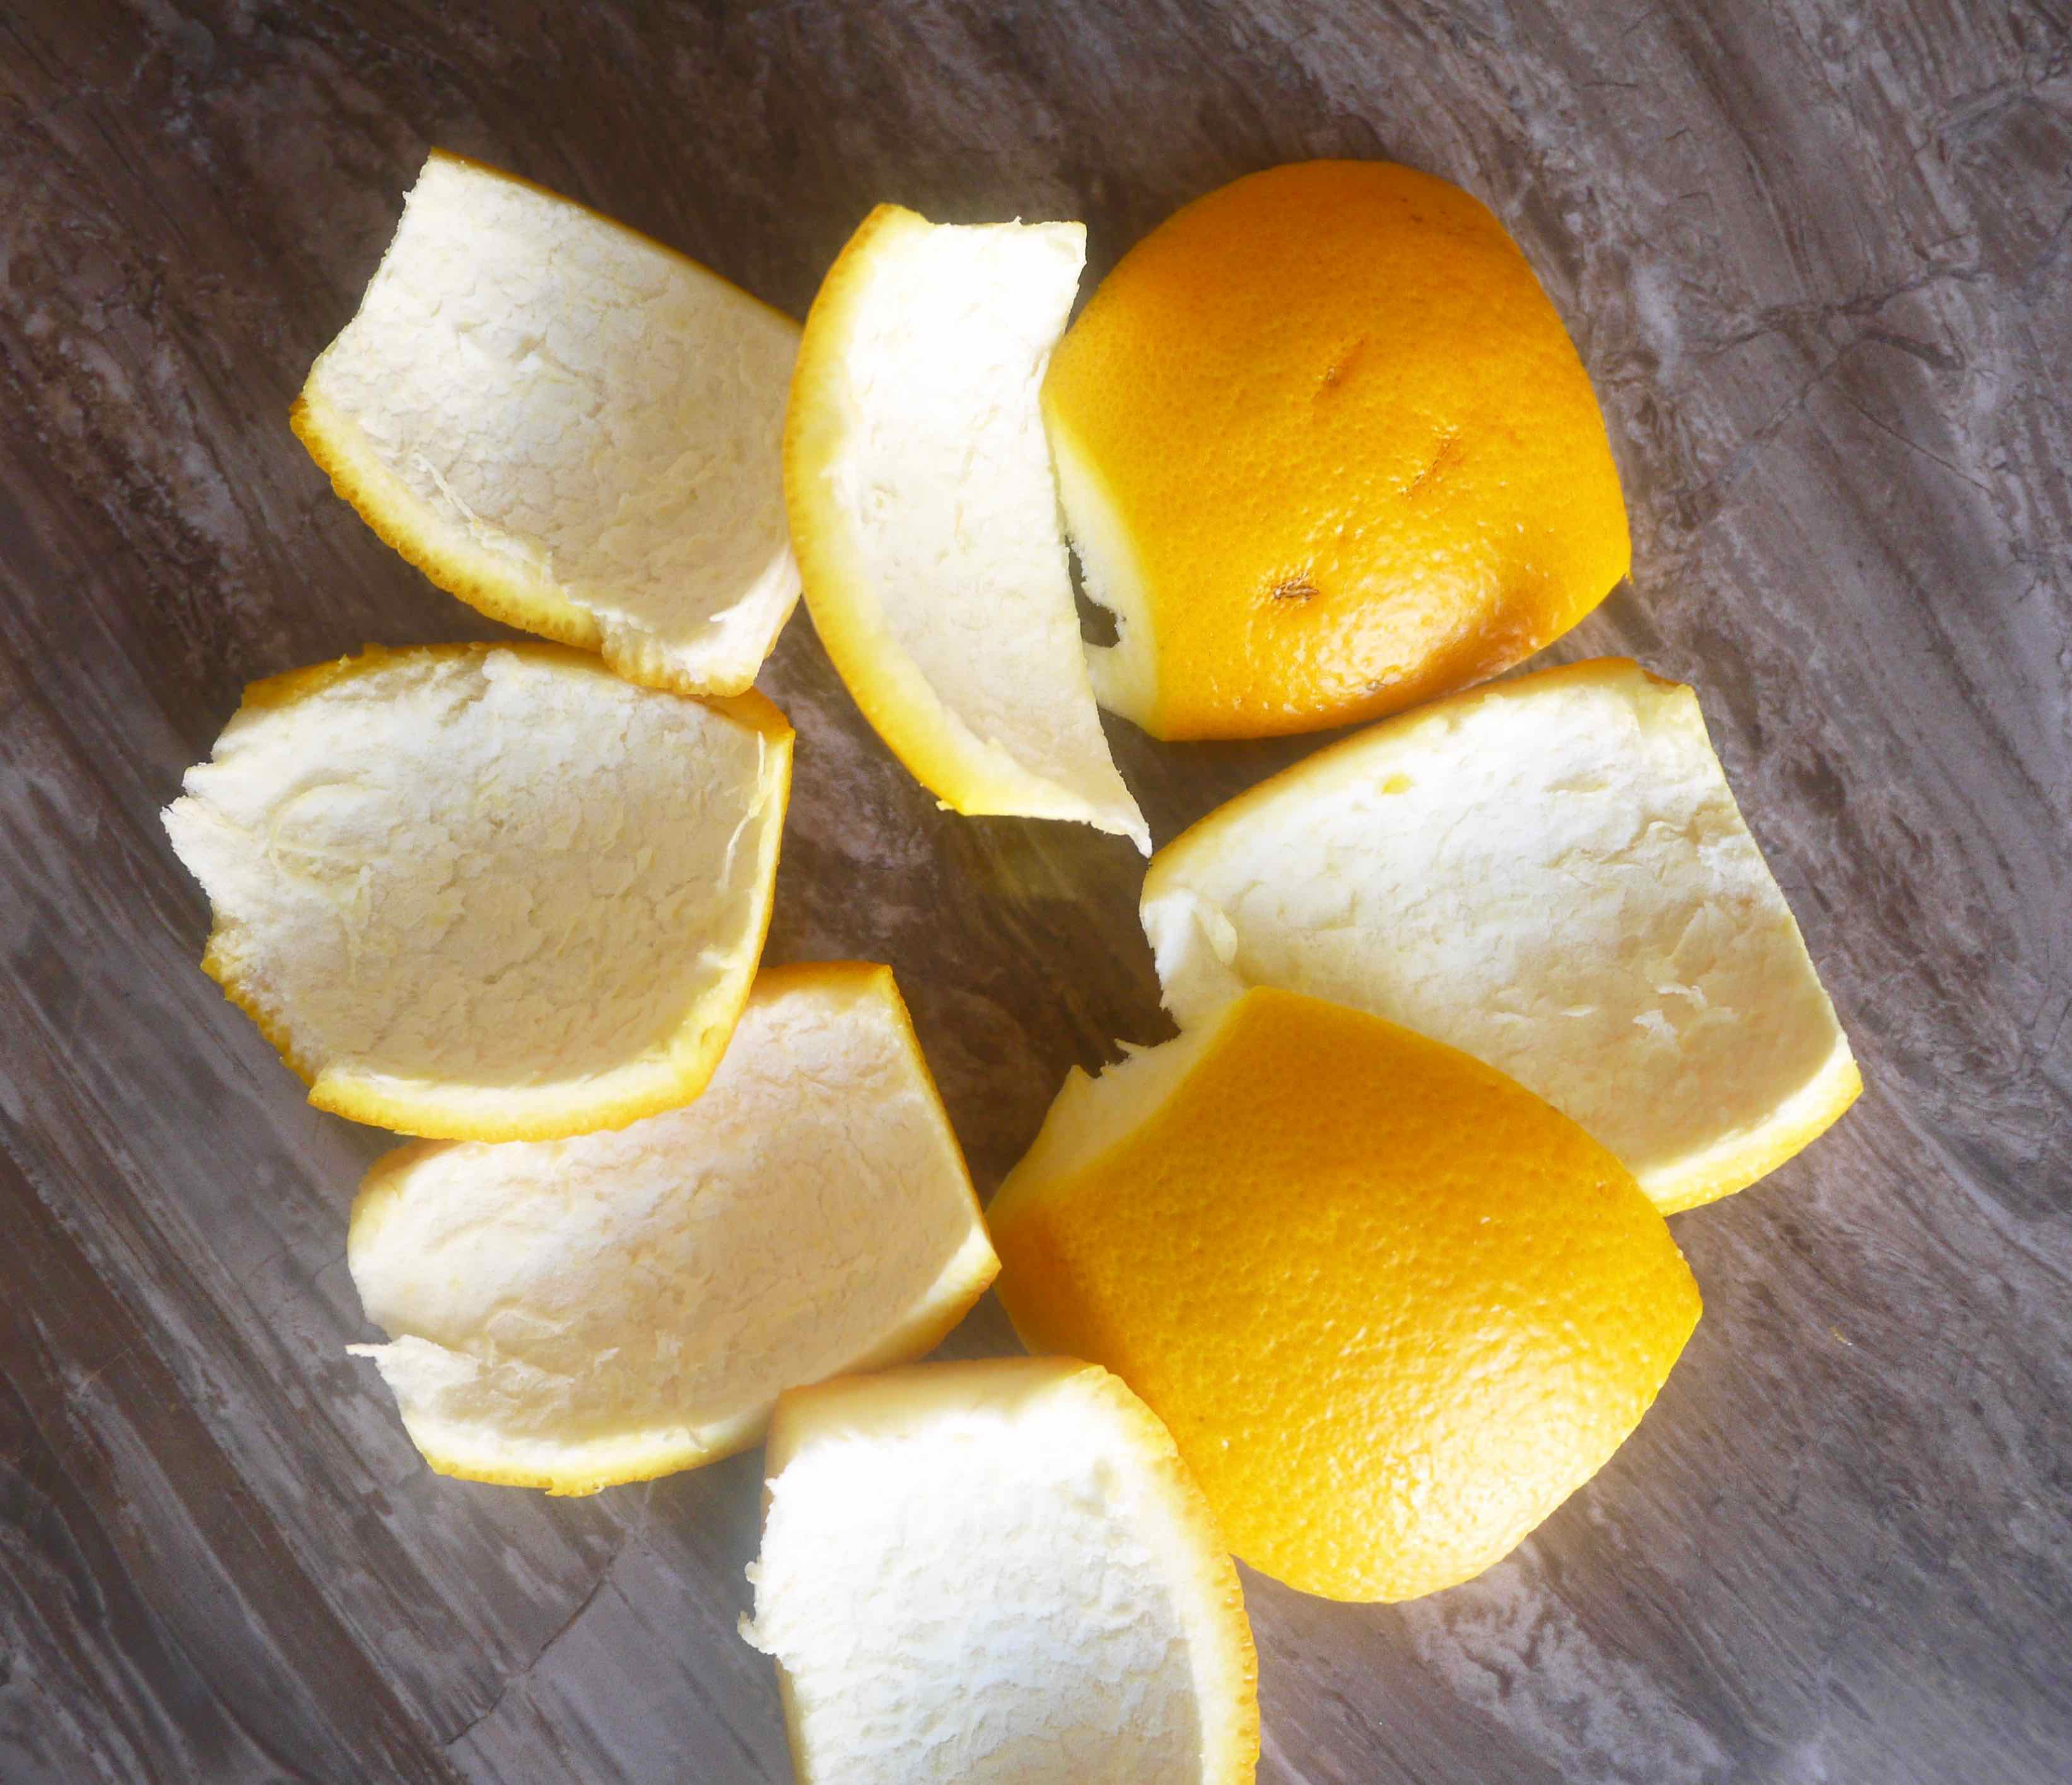 Orange peels cut into 8 pieces.